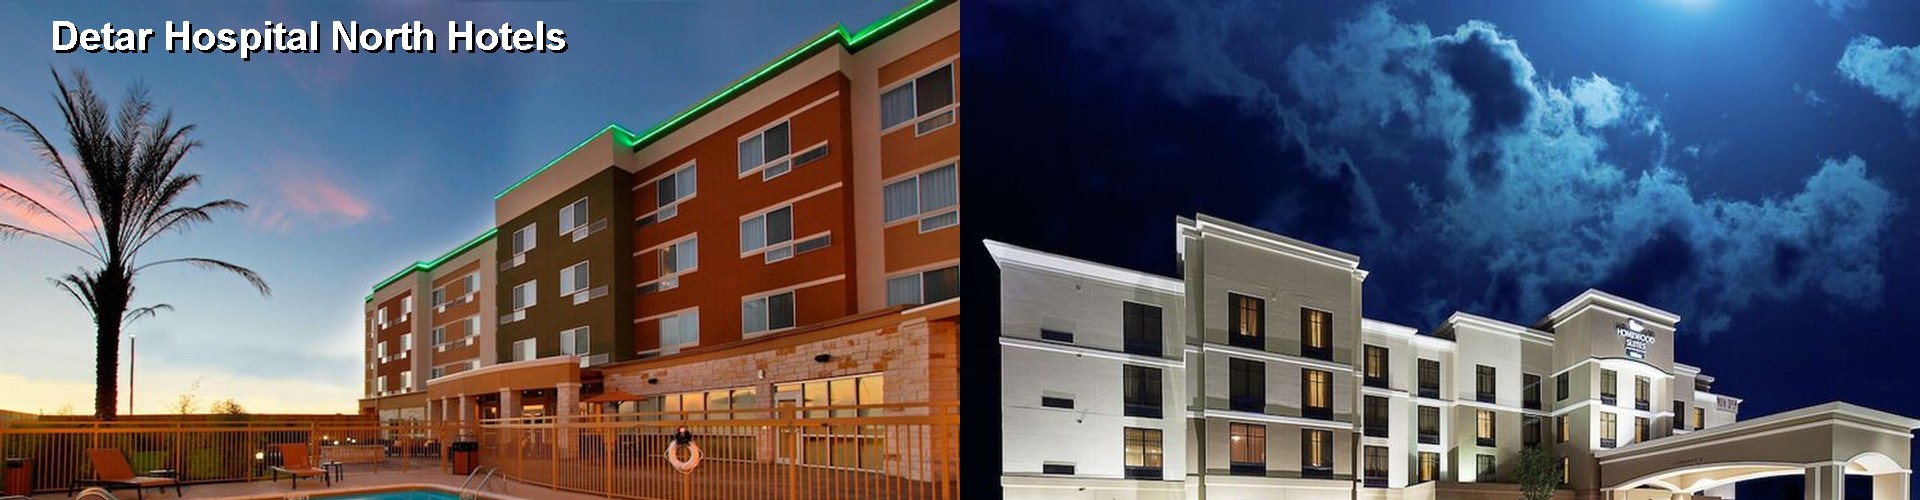 5 Best Hotels near Detar Hospital North